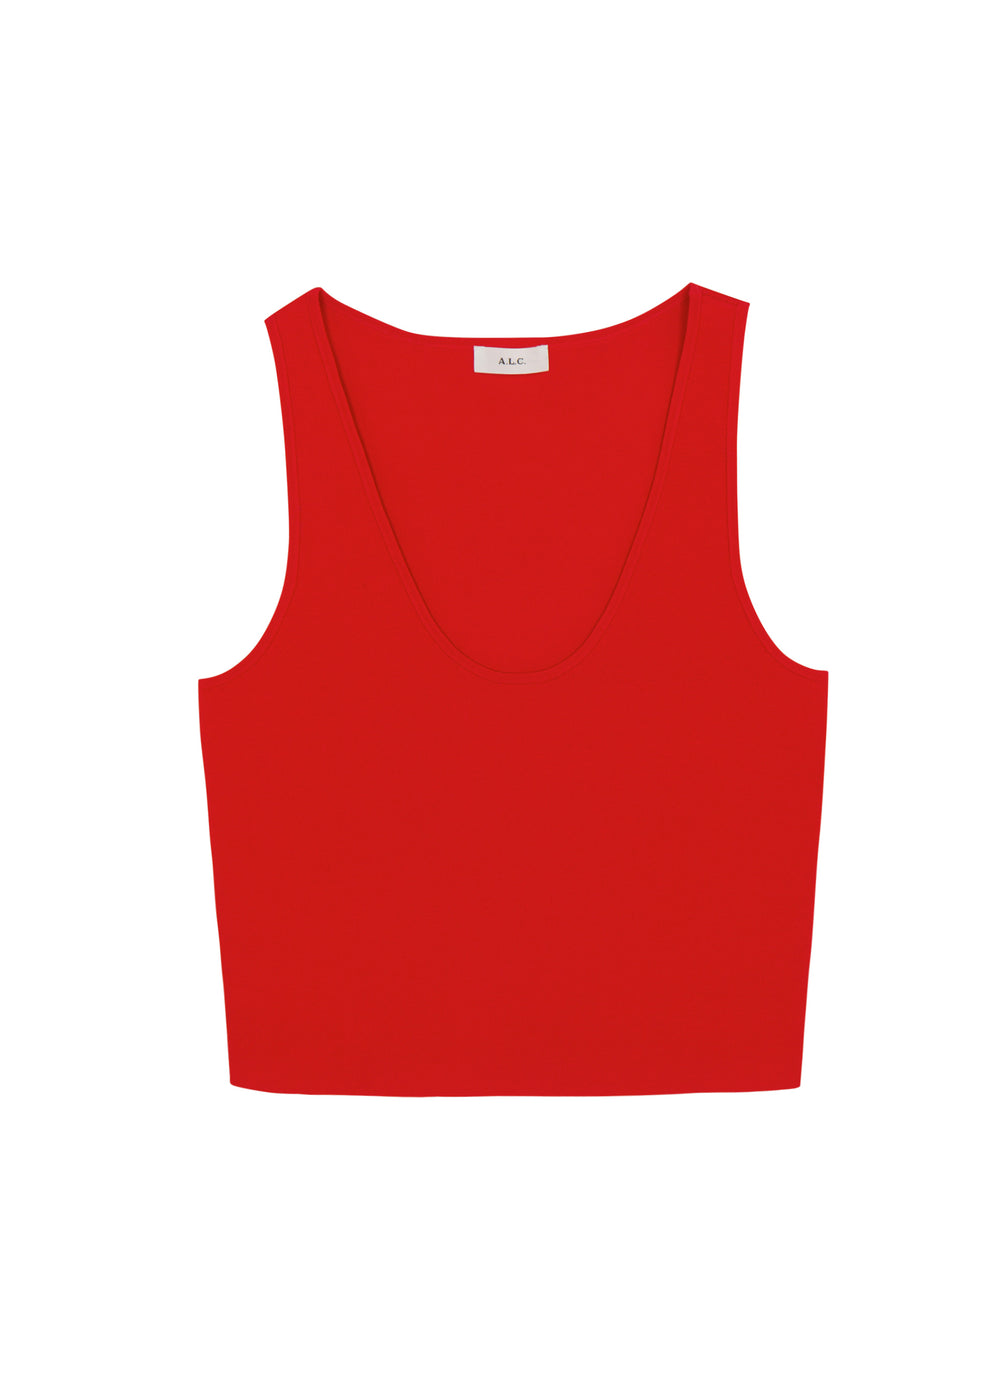 flatlay of red sleeveless top